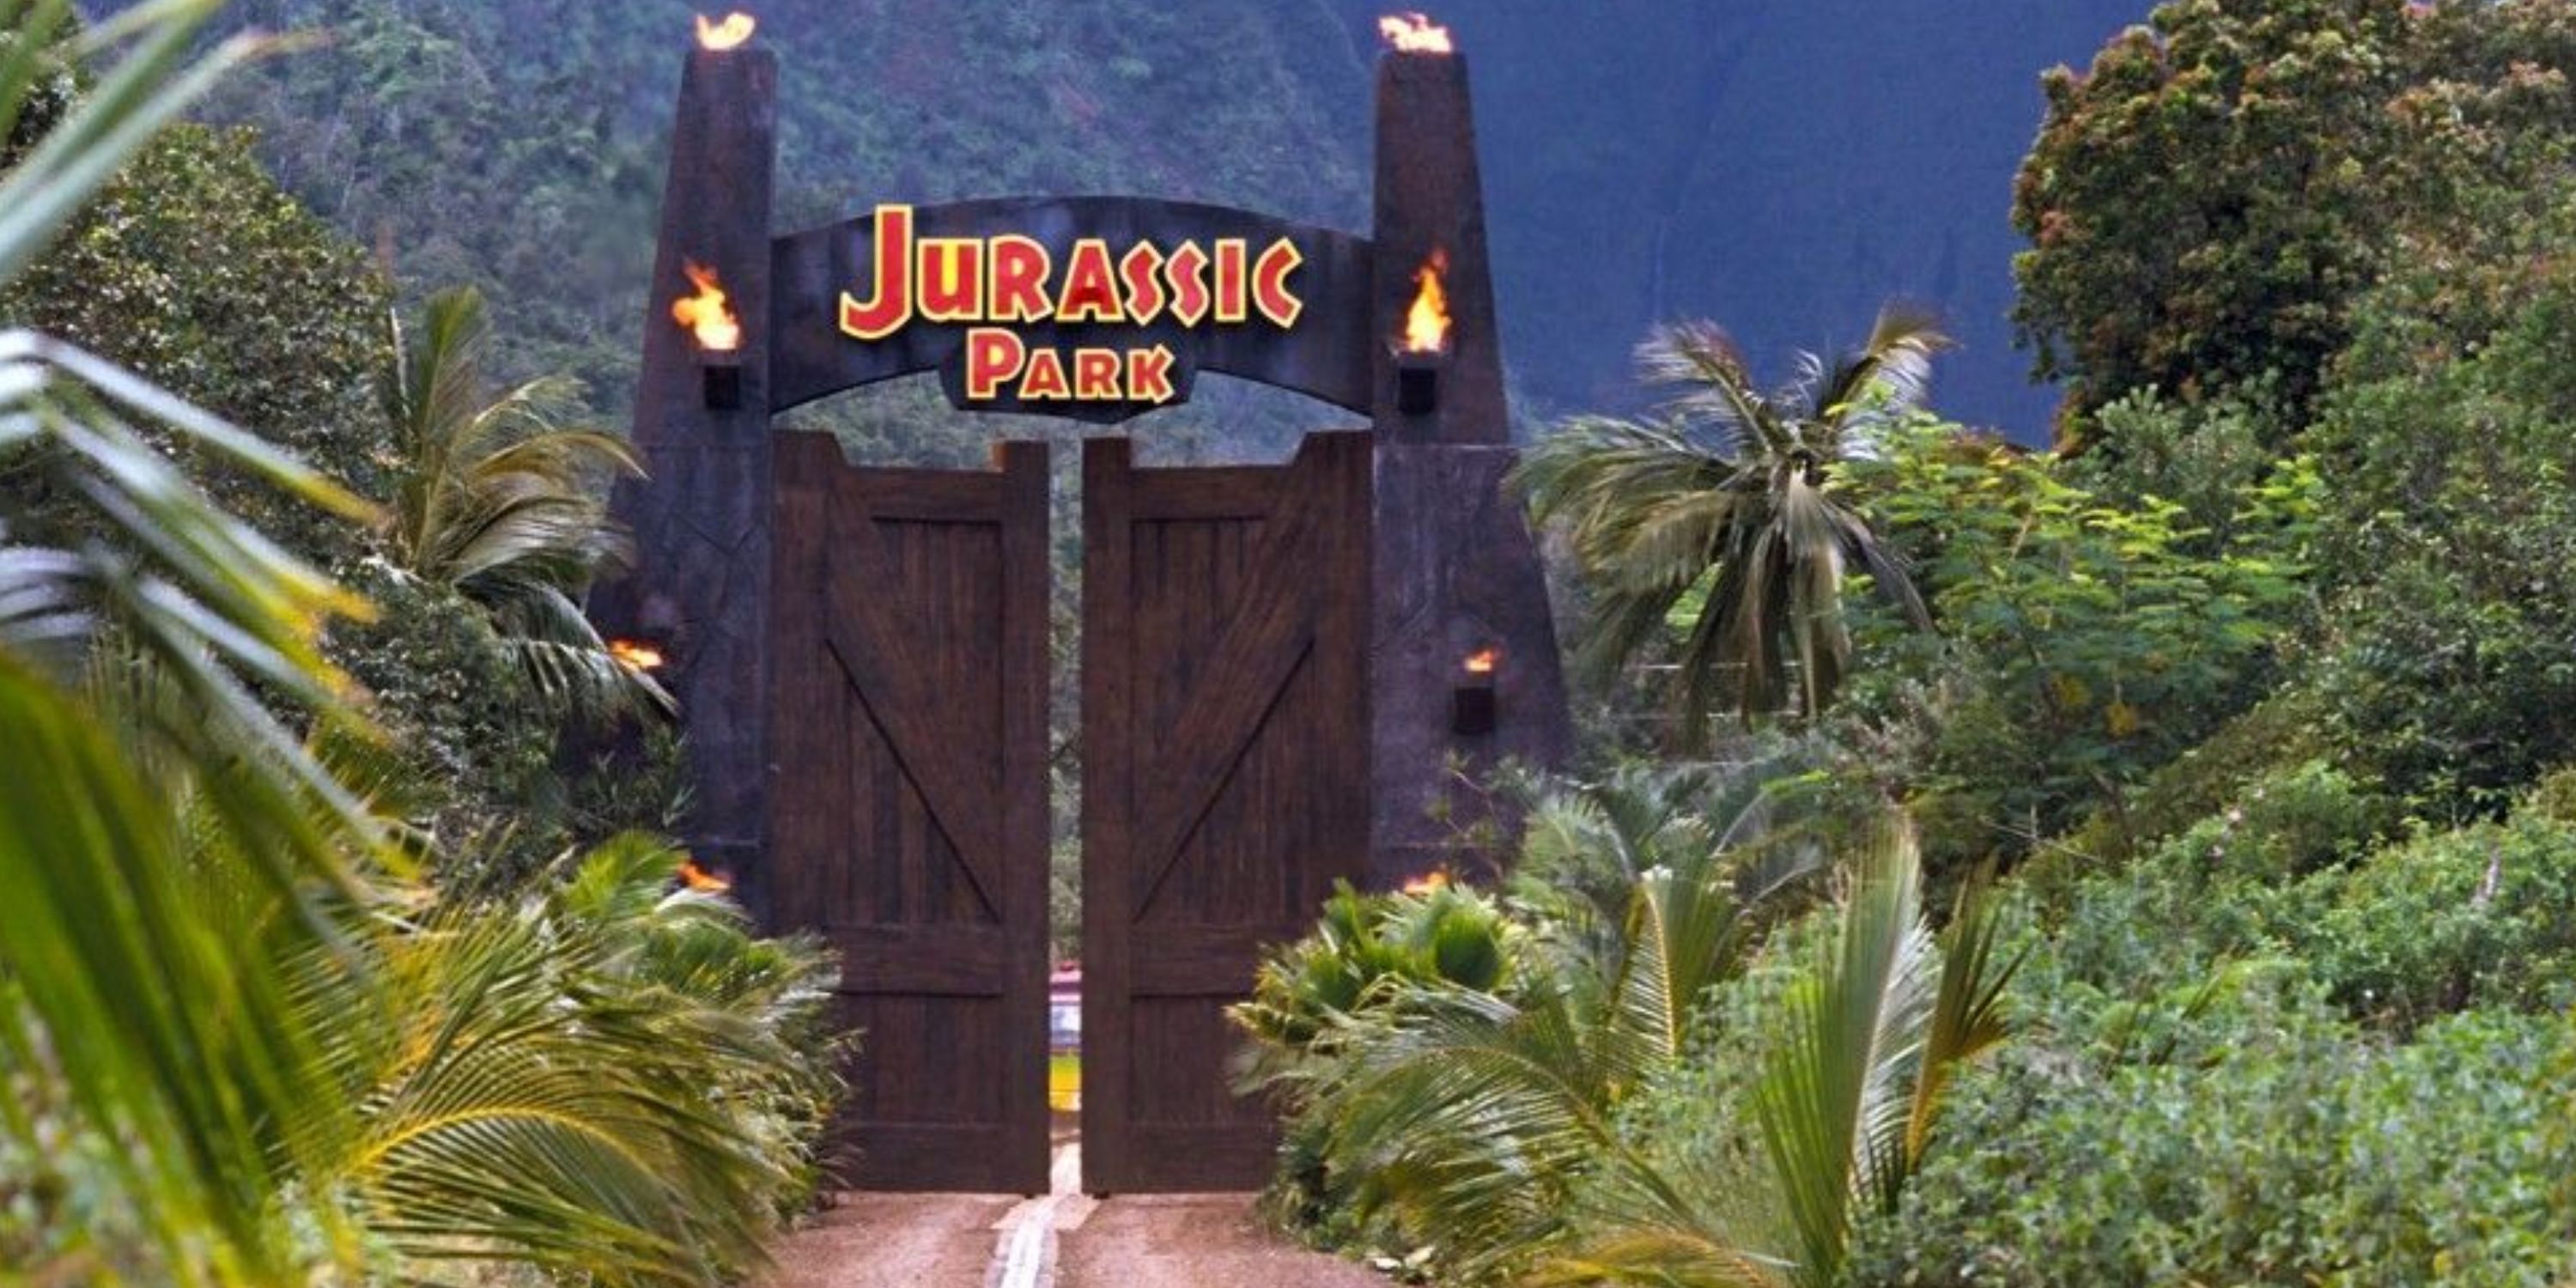 The gates of Jurassic Park